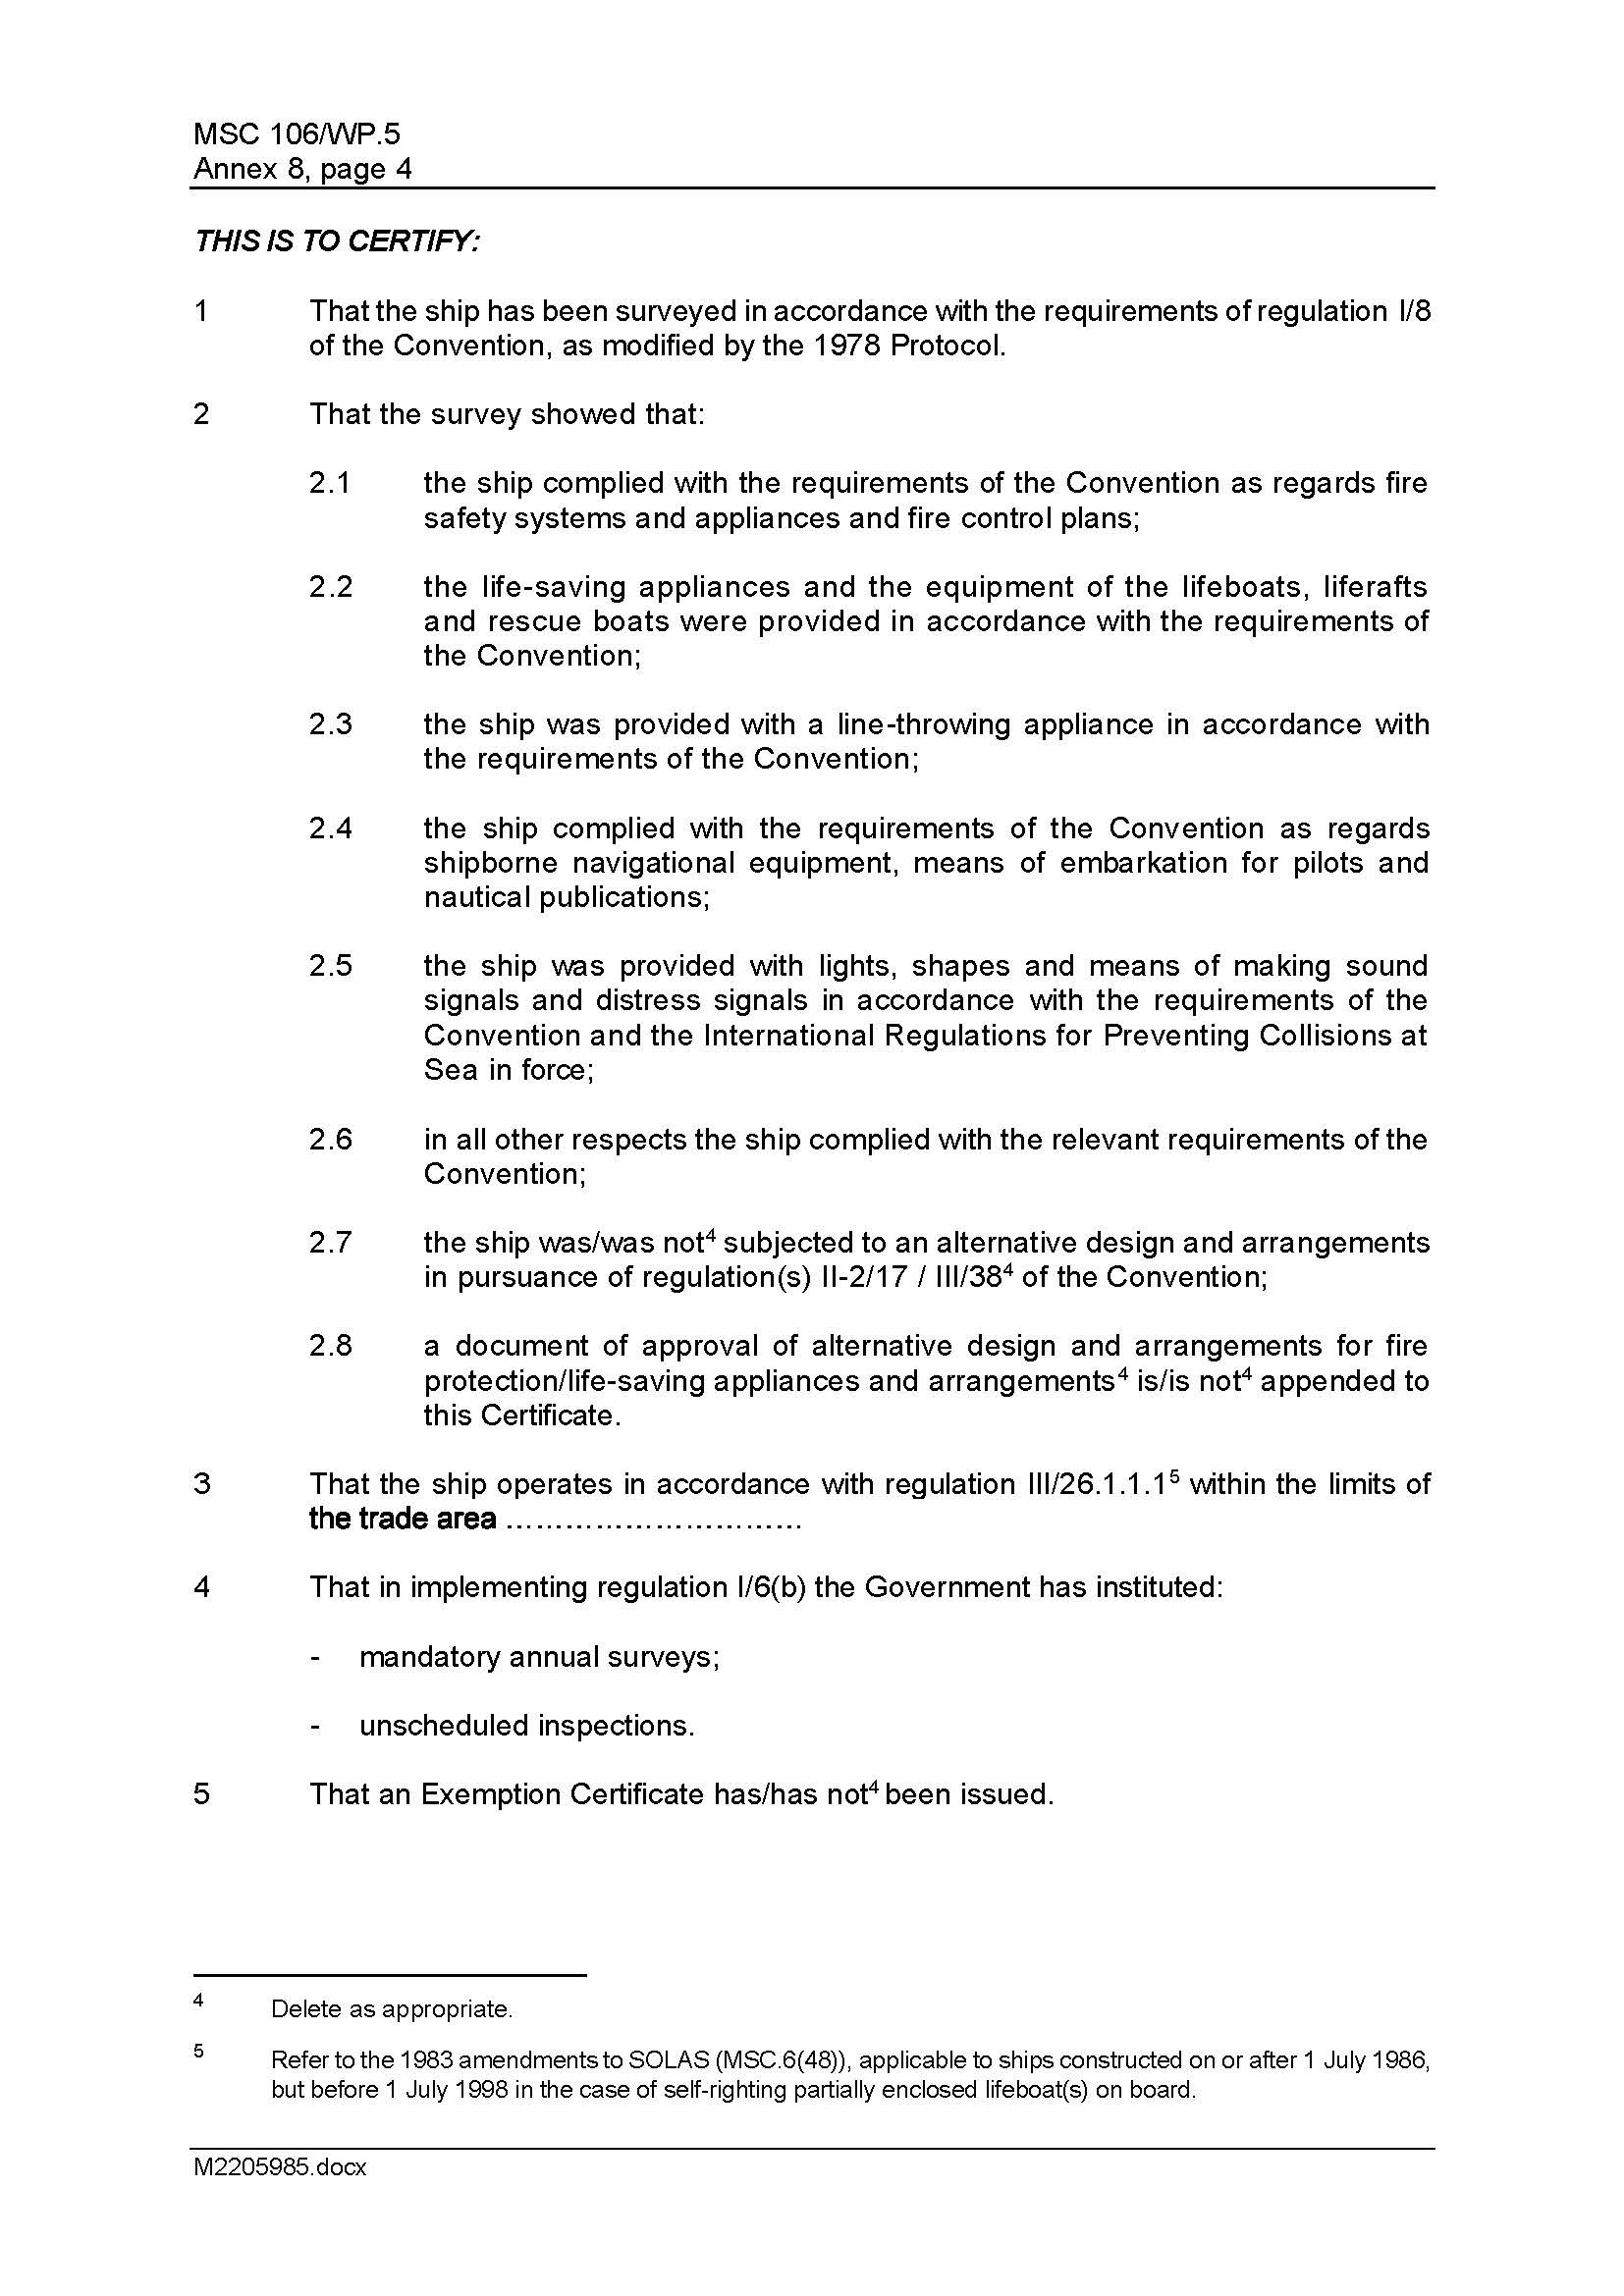 MSC 106 CONSIDERATION AND ADOPTION OF AMENDMENTS TO MANDATORY INSTRUMENTS